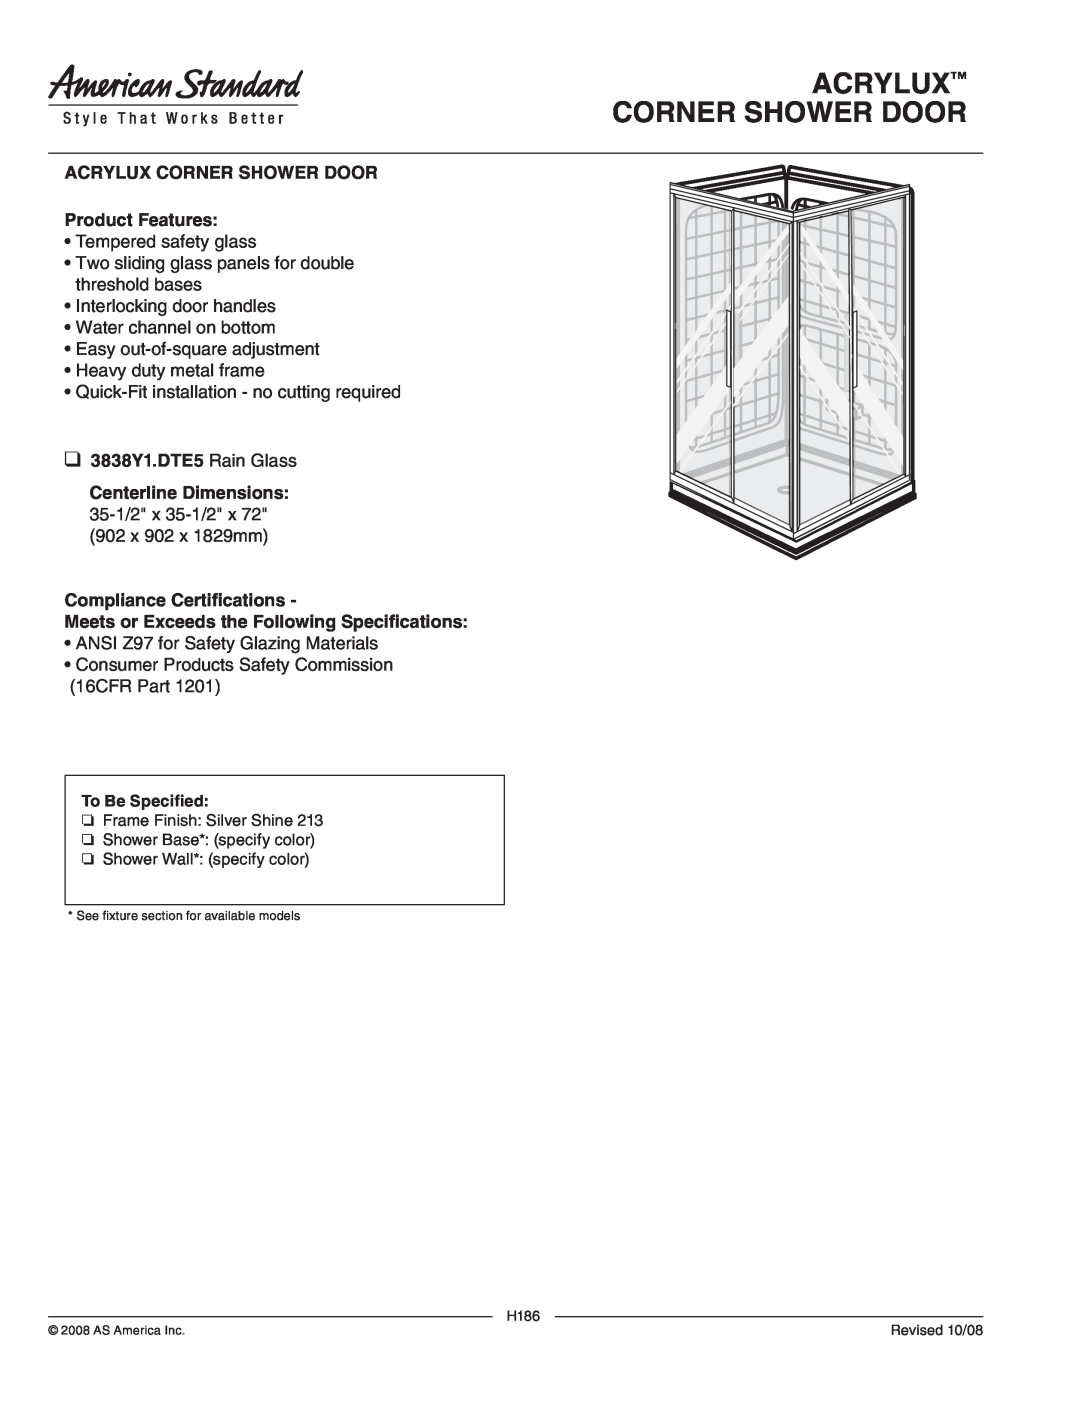 American Standard H186 dimensions Acrylux Corner Shower Door, ACRYLUX CORNER SHOWER DOOR Product Features 